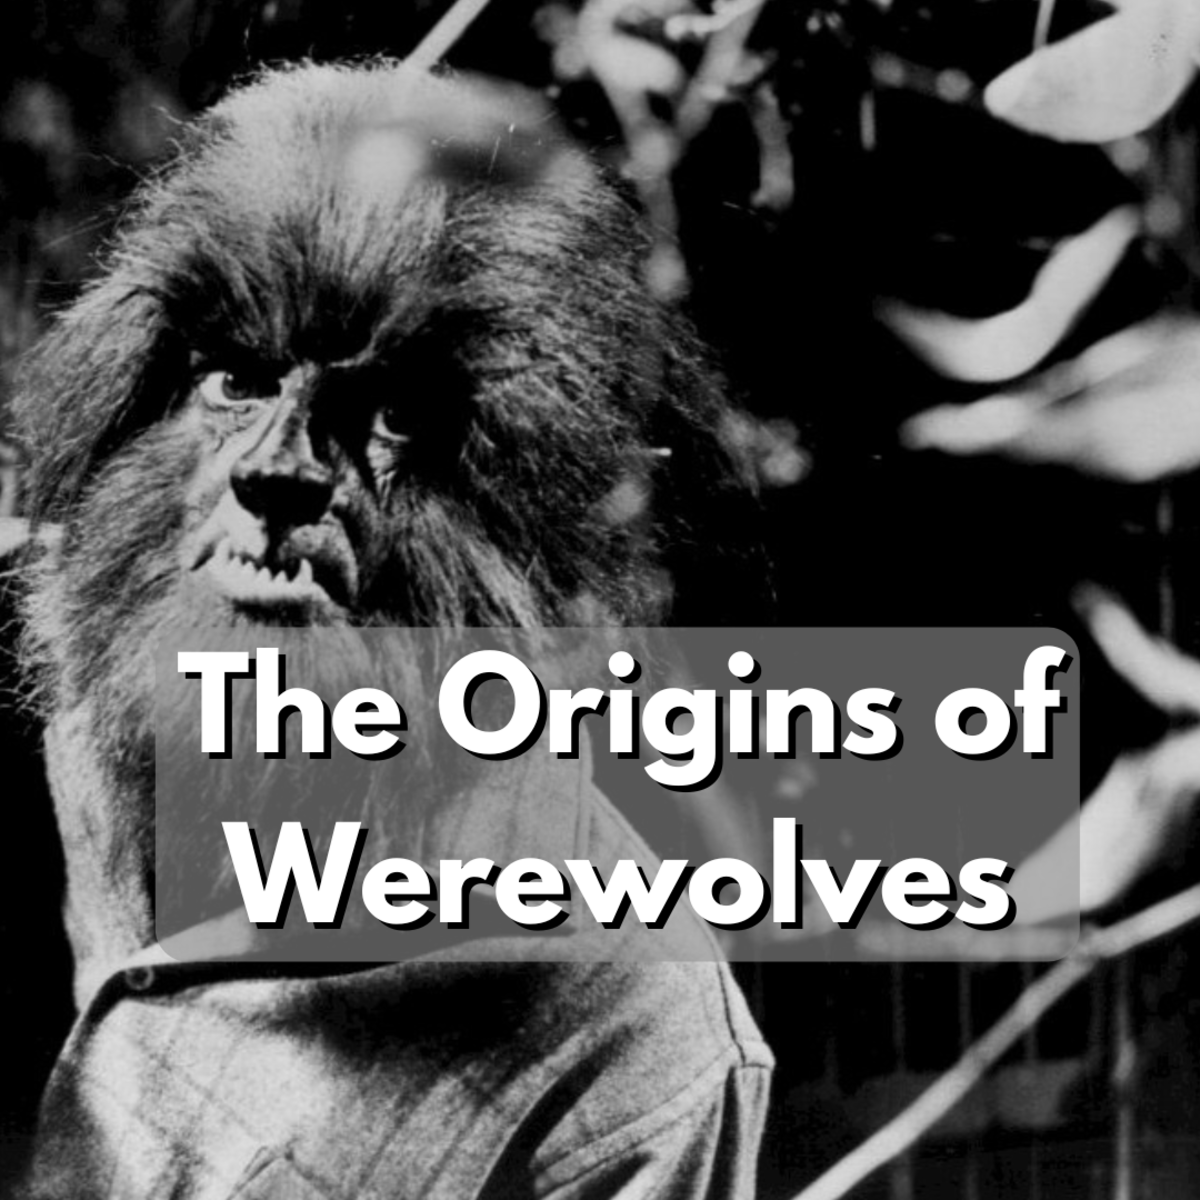 The Origins of Werewolves